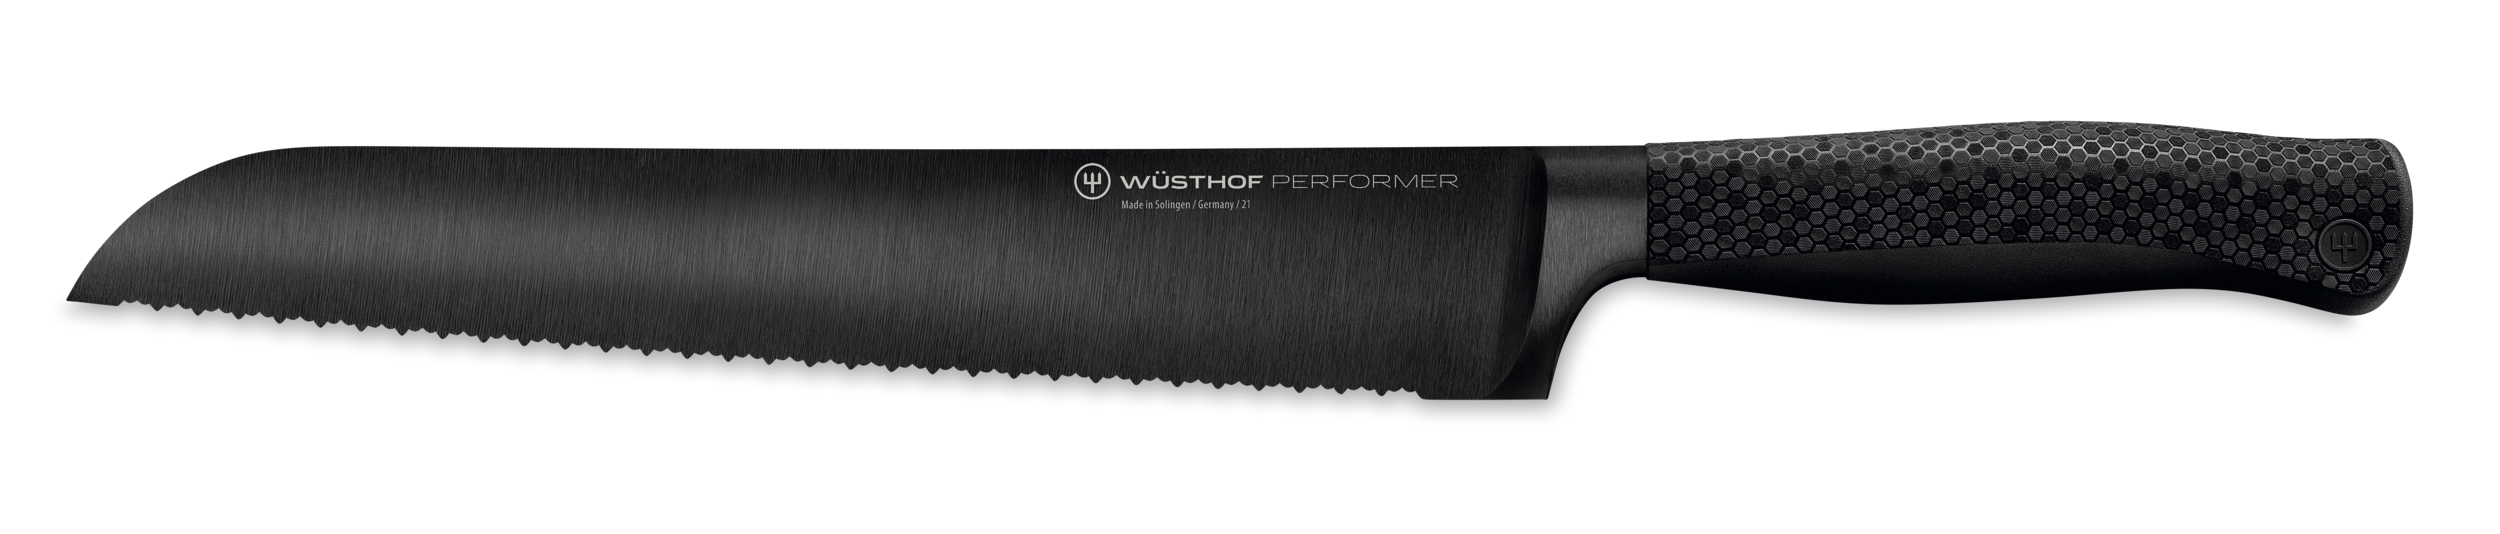 Wüsthof Performer Brotmesser 23